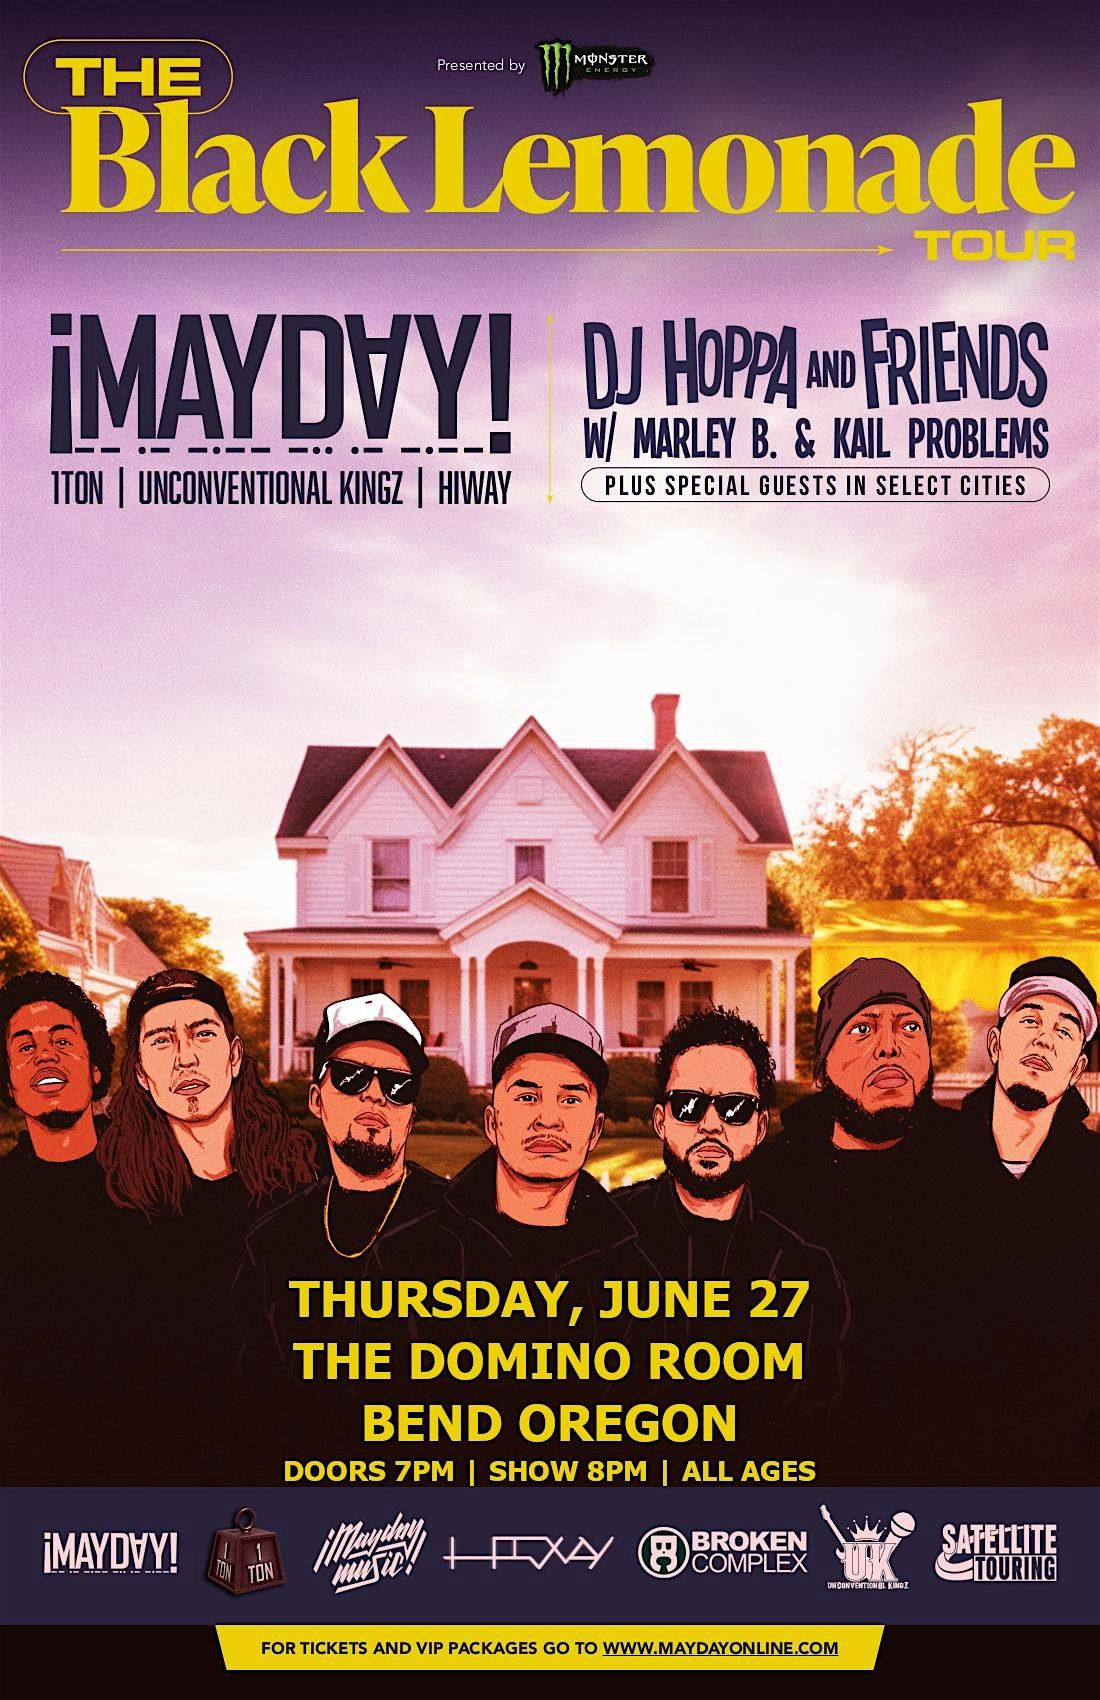 Mayday, 1Ton, Unconventional Kingz, Hiway, and DJ Hoppa at The Domino Room